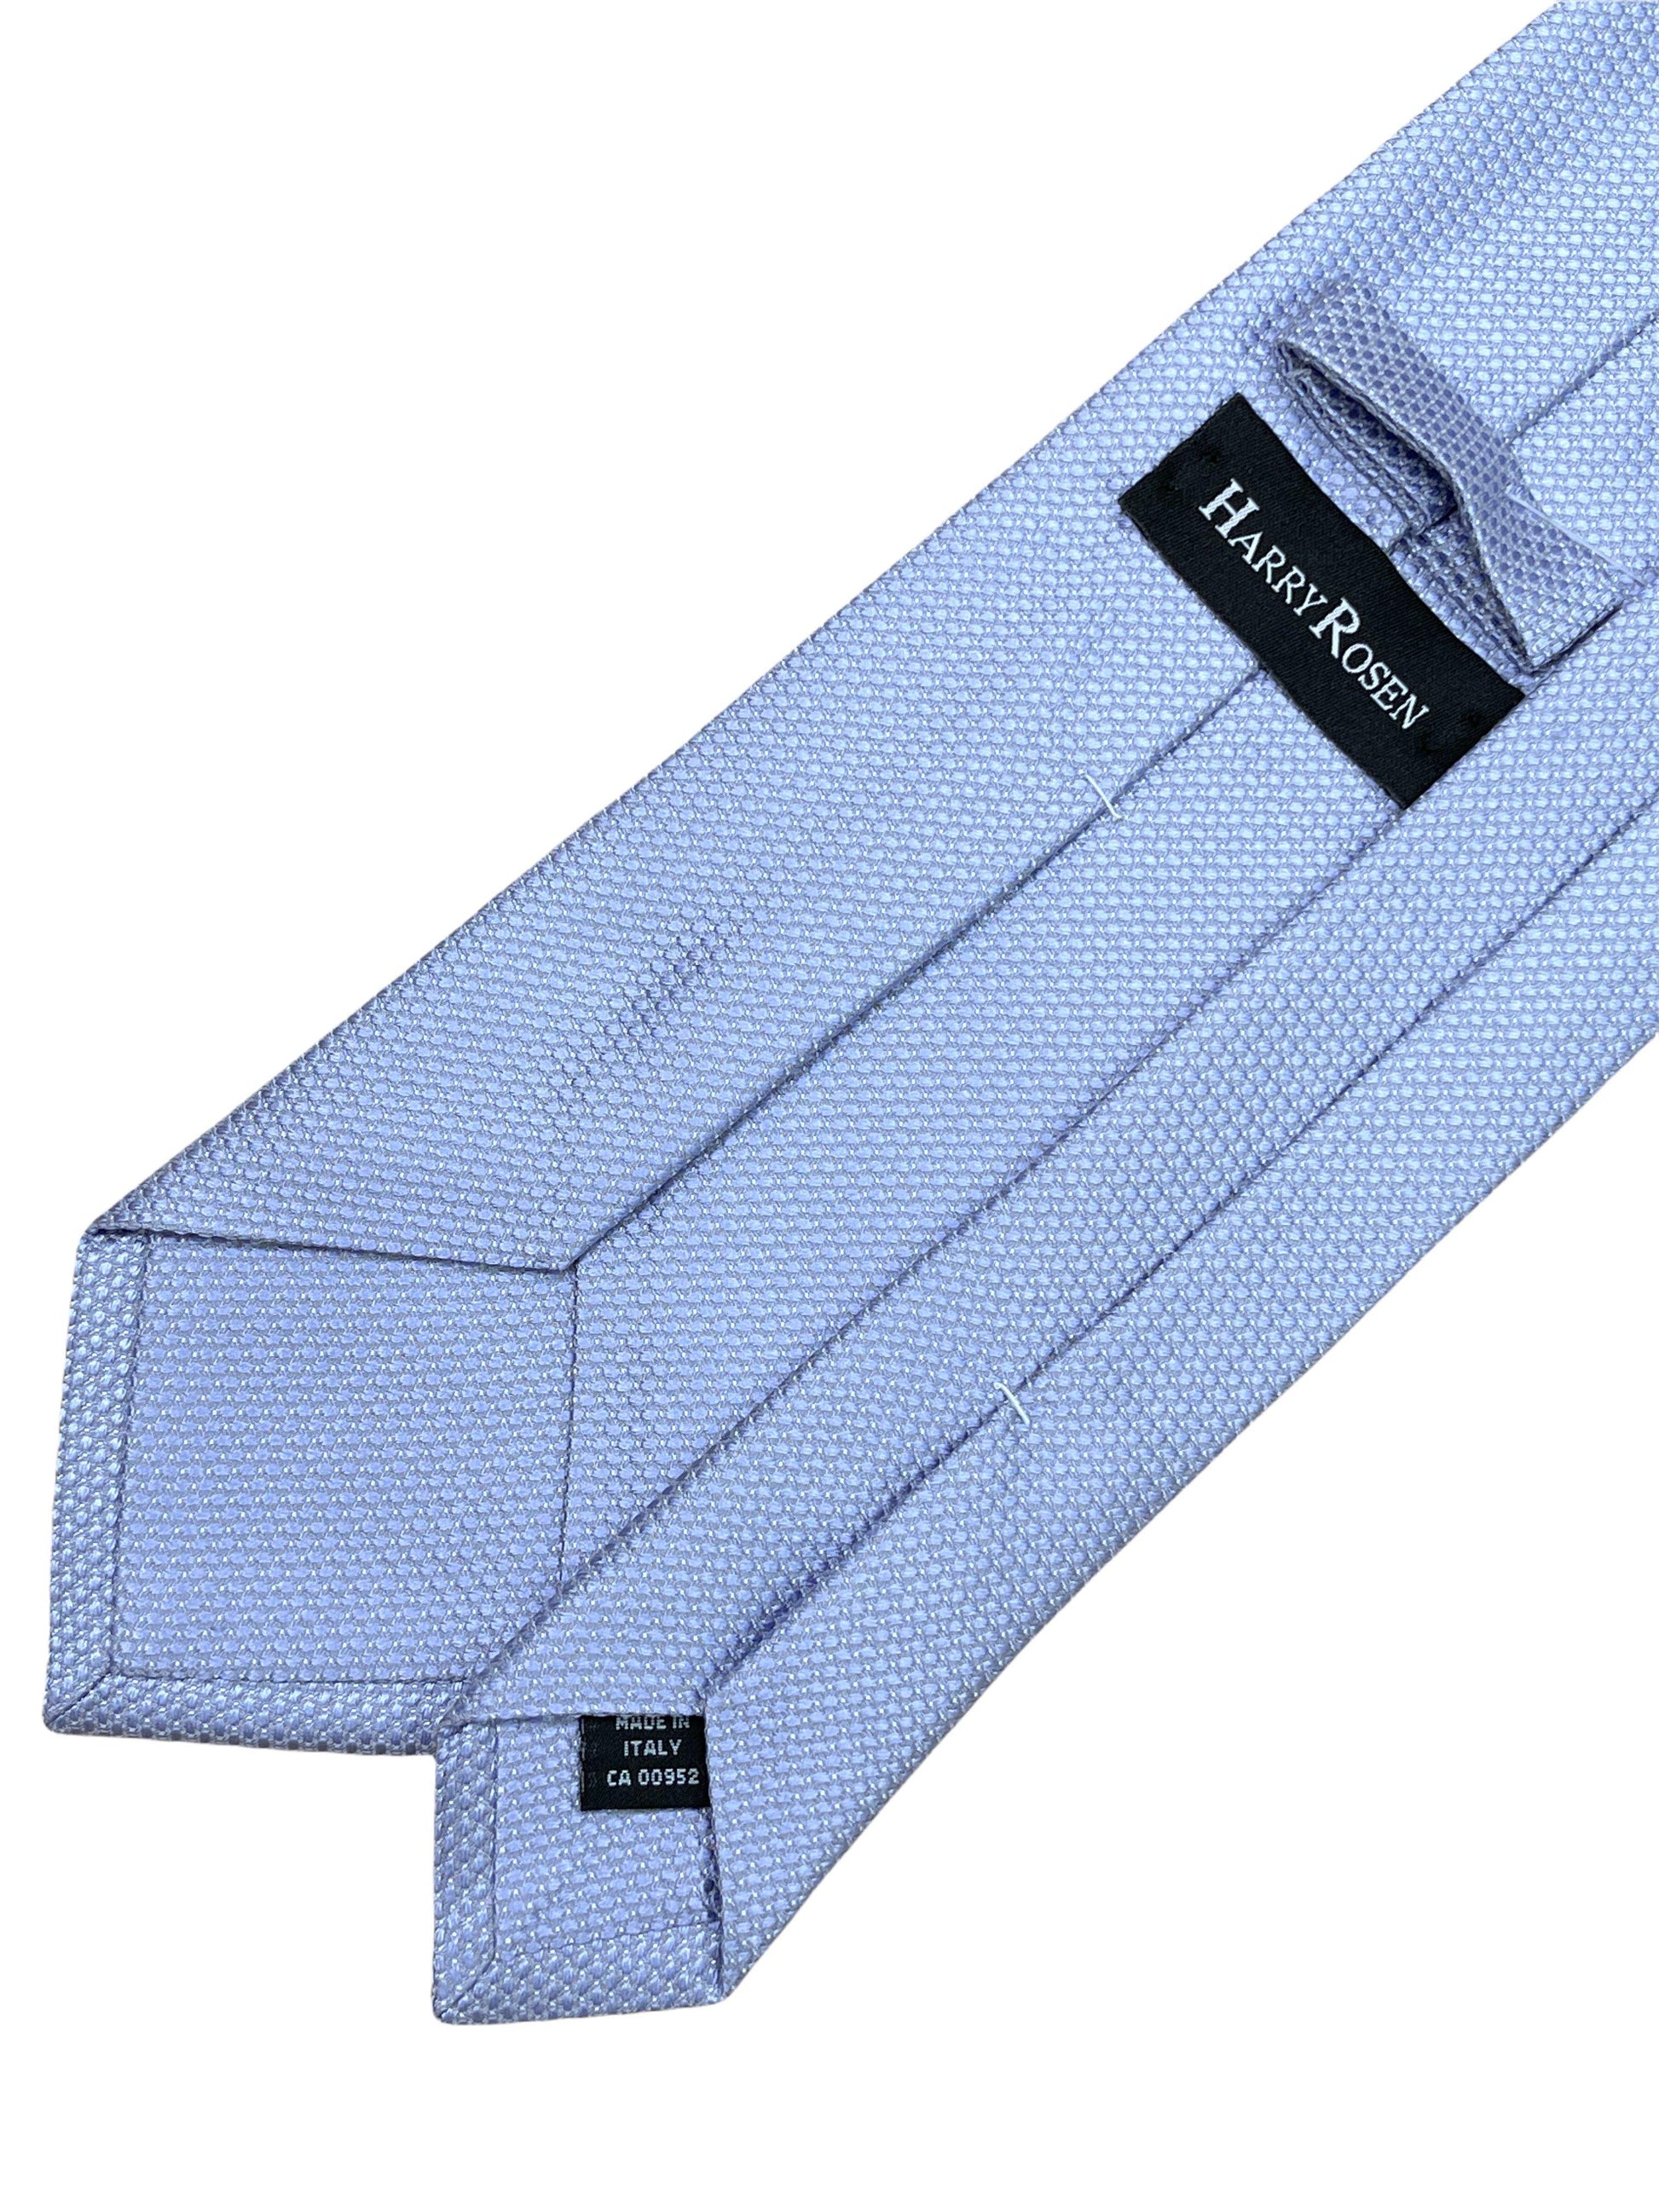 Harry Rosen light sky blue 100% silk tie Genuine Design luxury consignment 